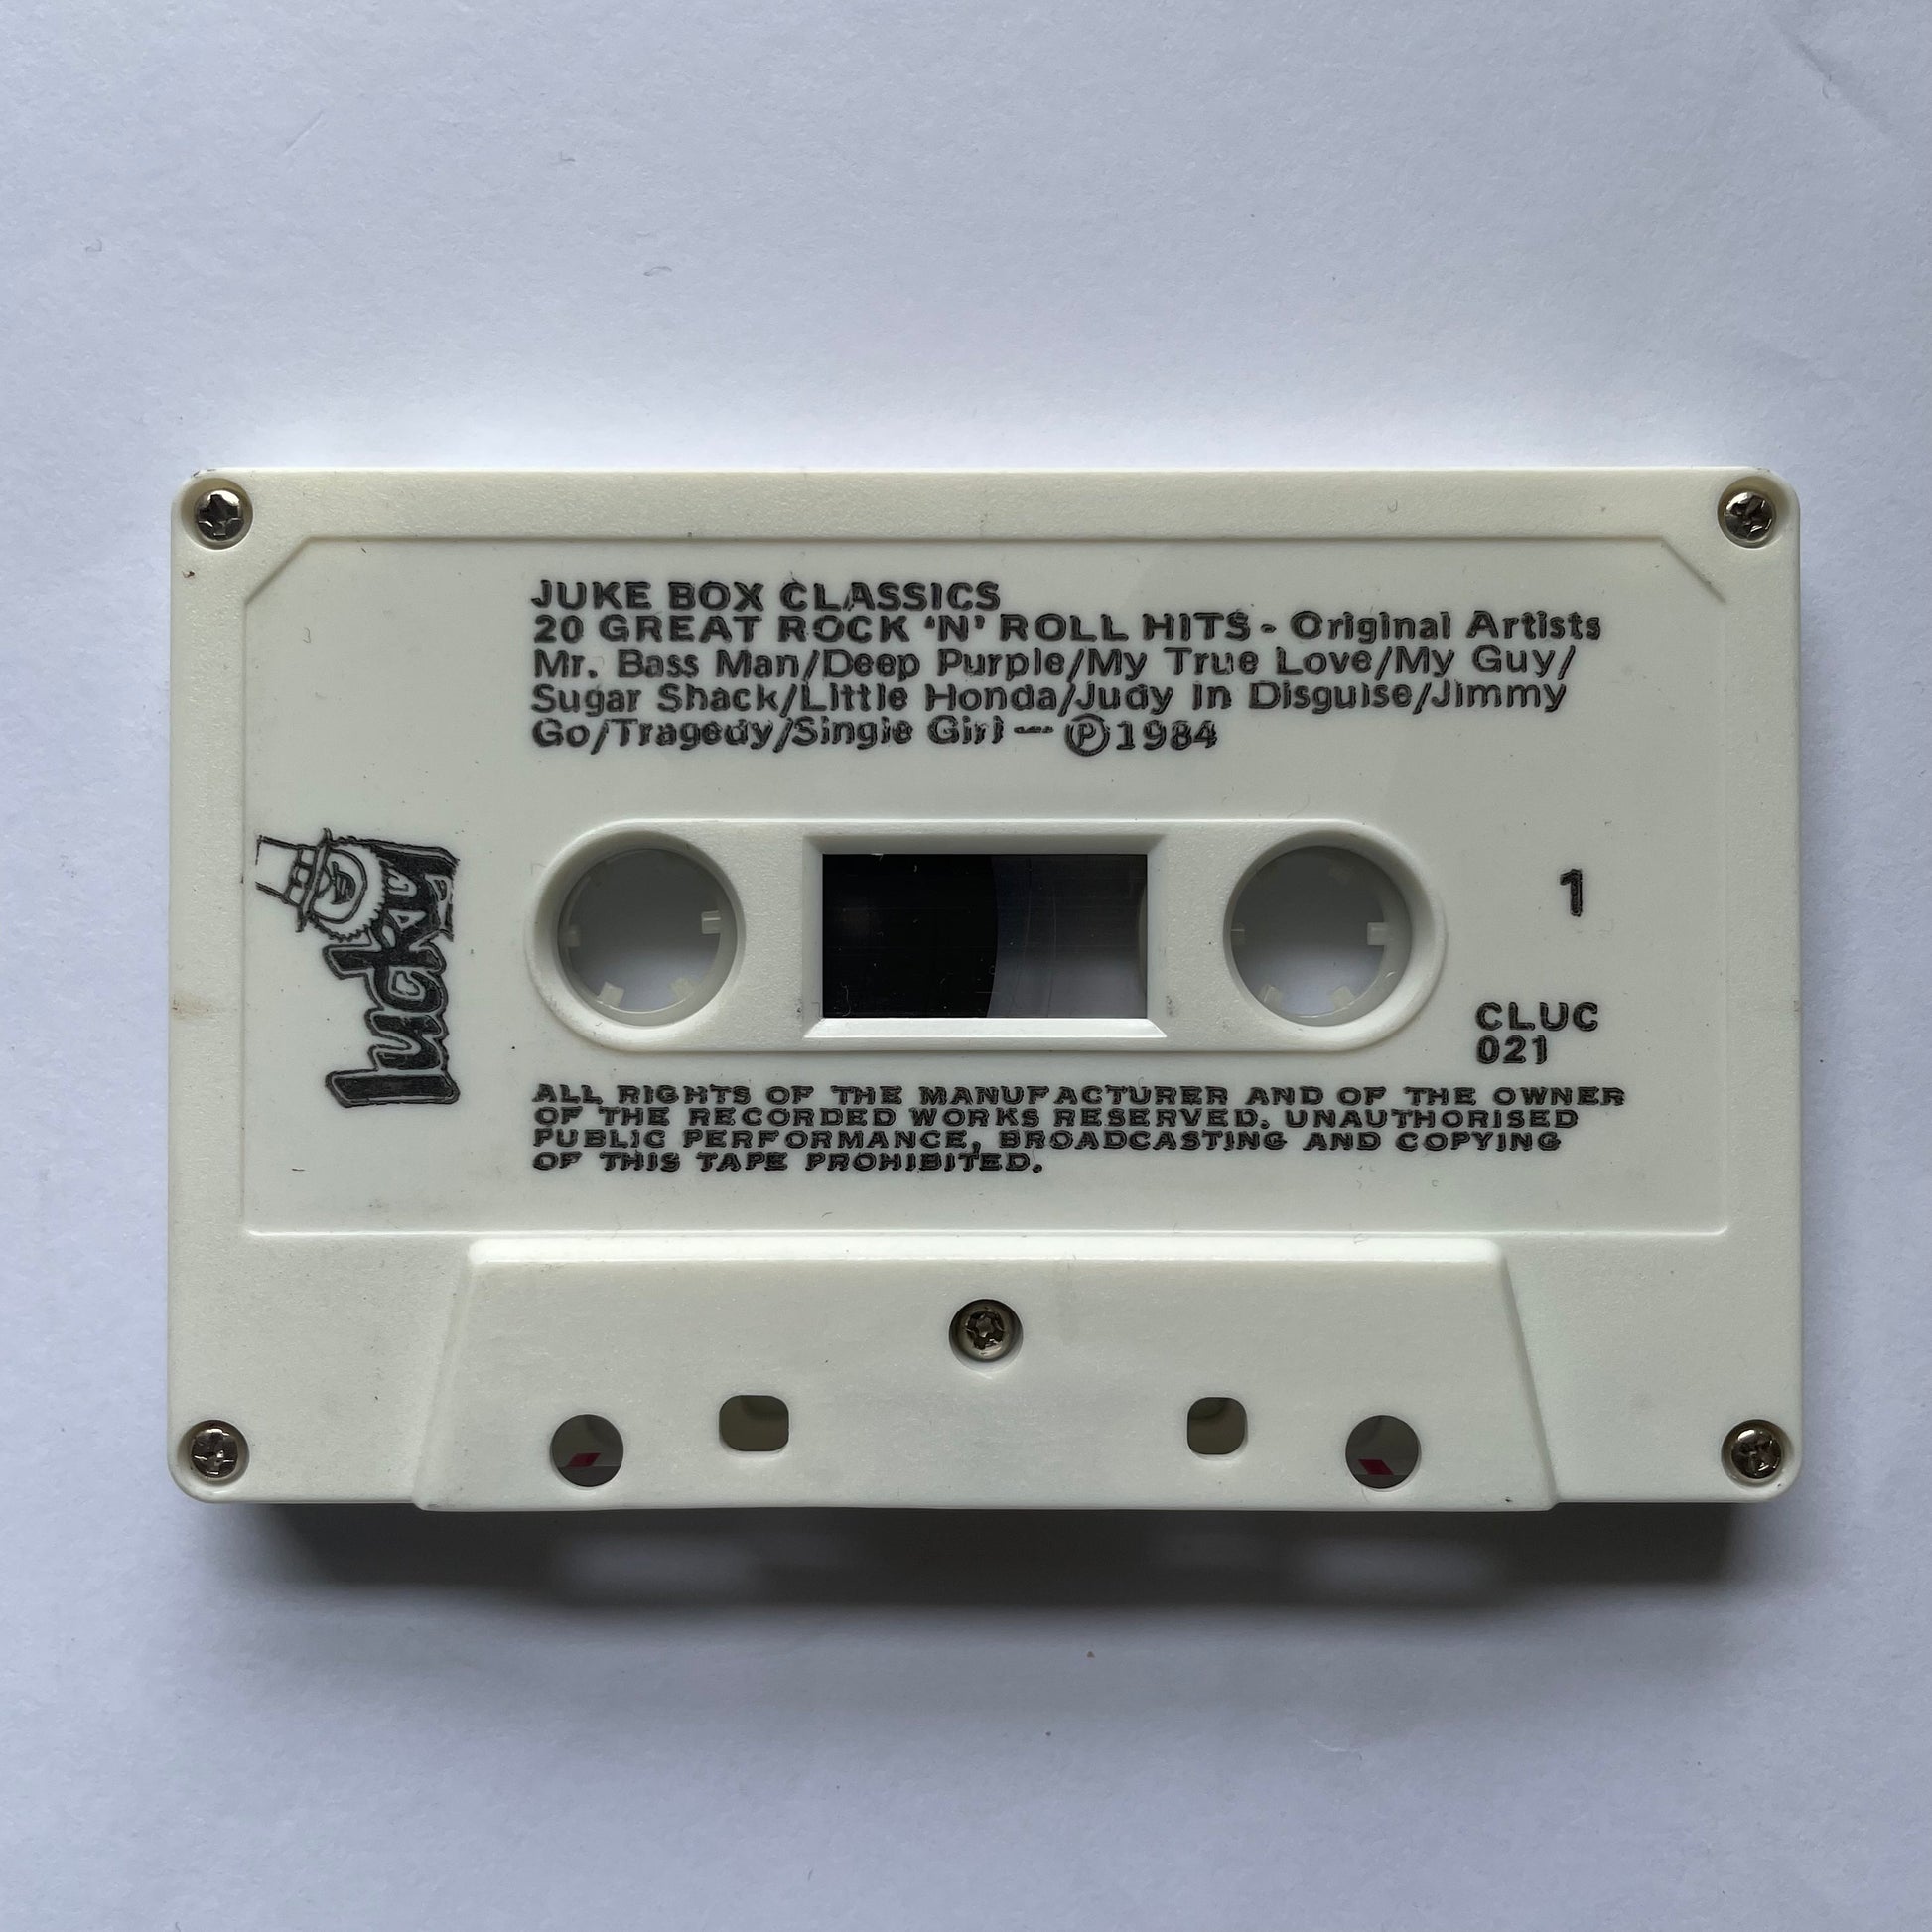 Tape Cassette Juke Box Classics 20 Greats Rock ‘n’ Roll Classics side 1 